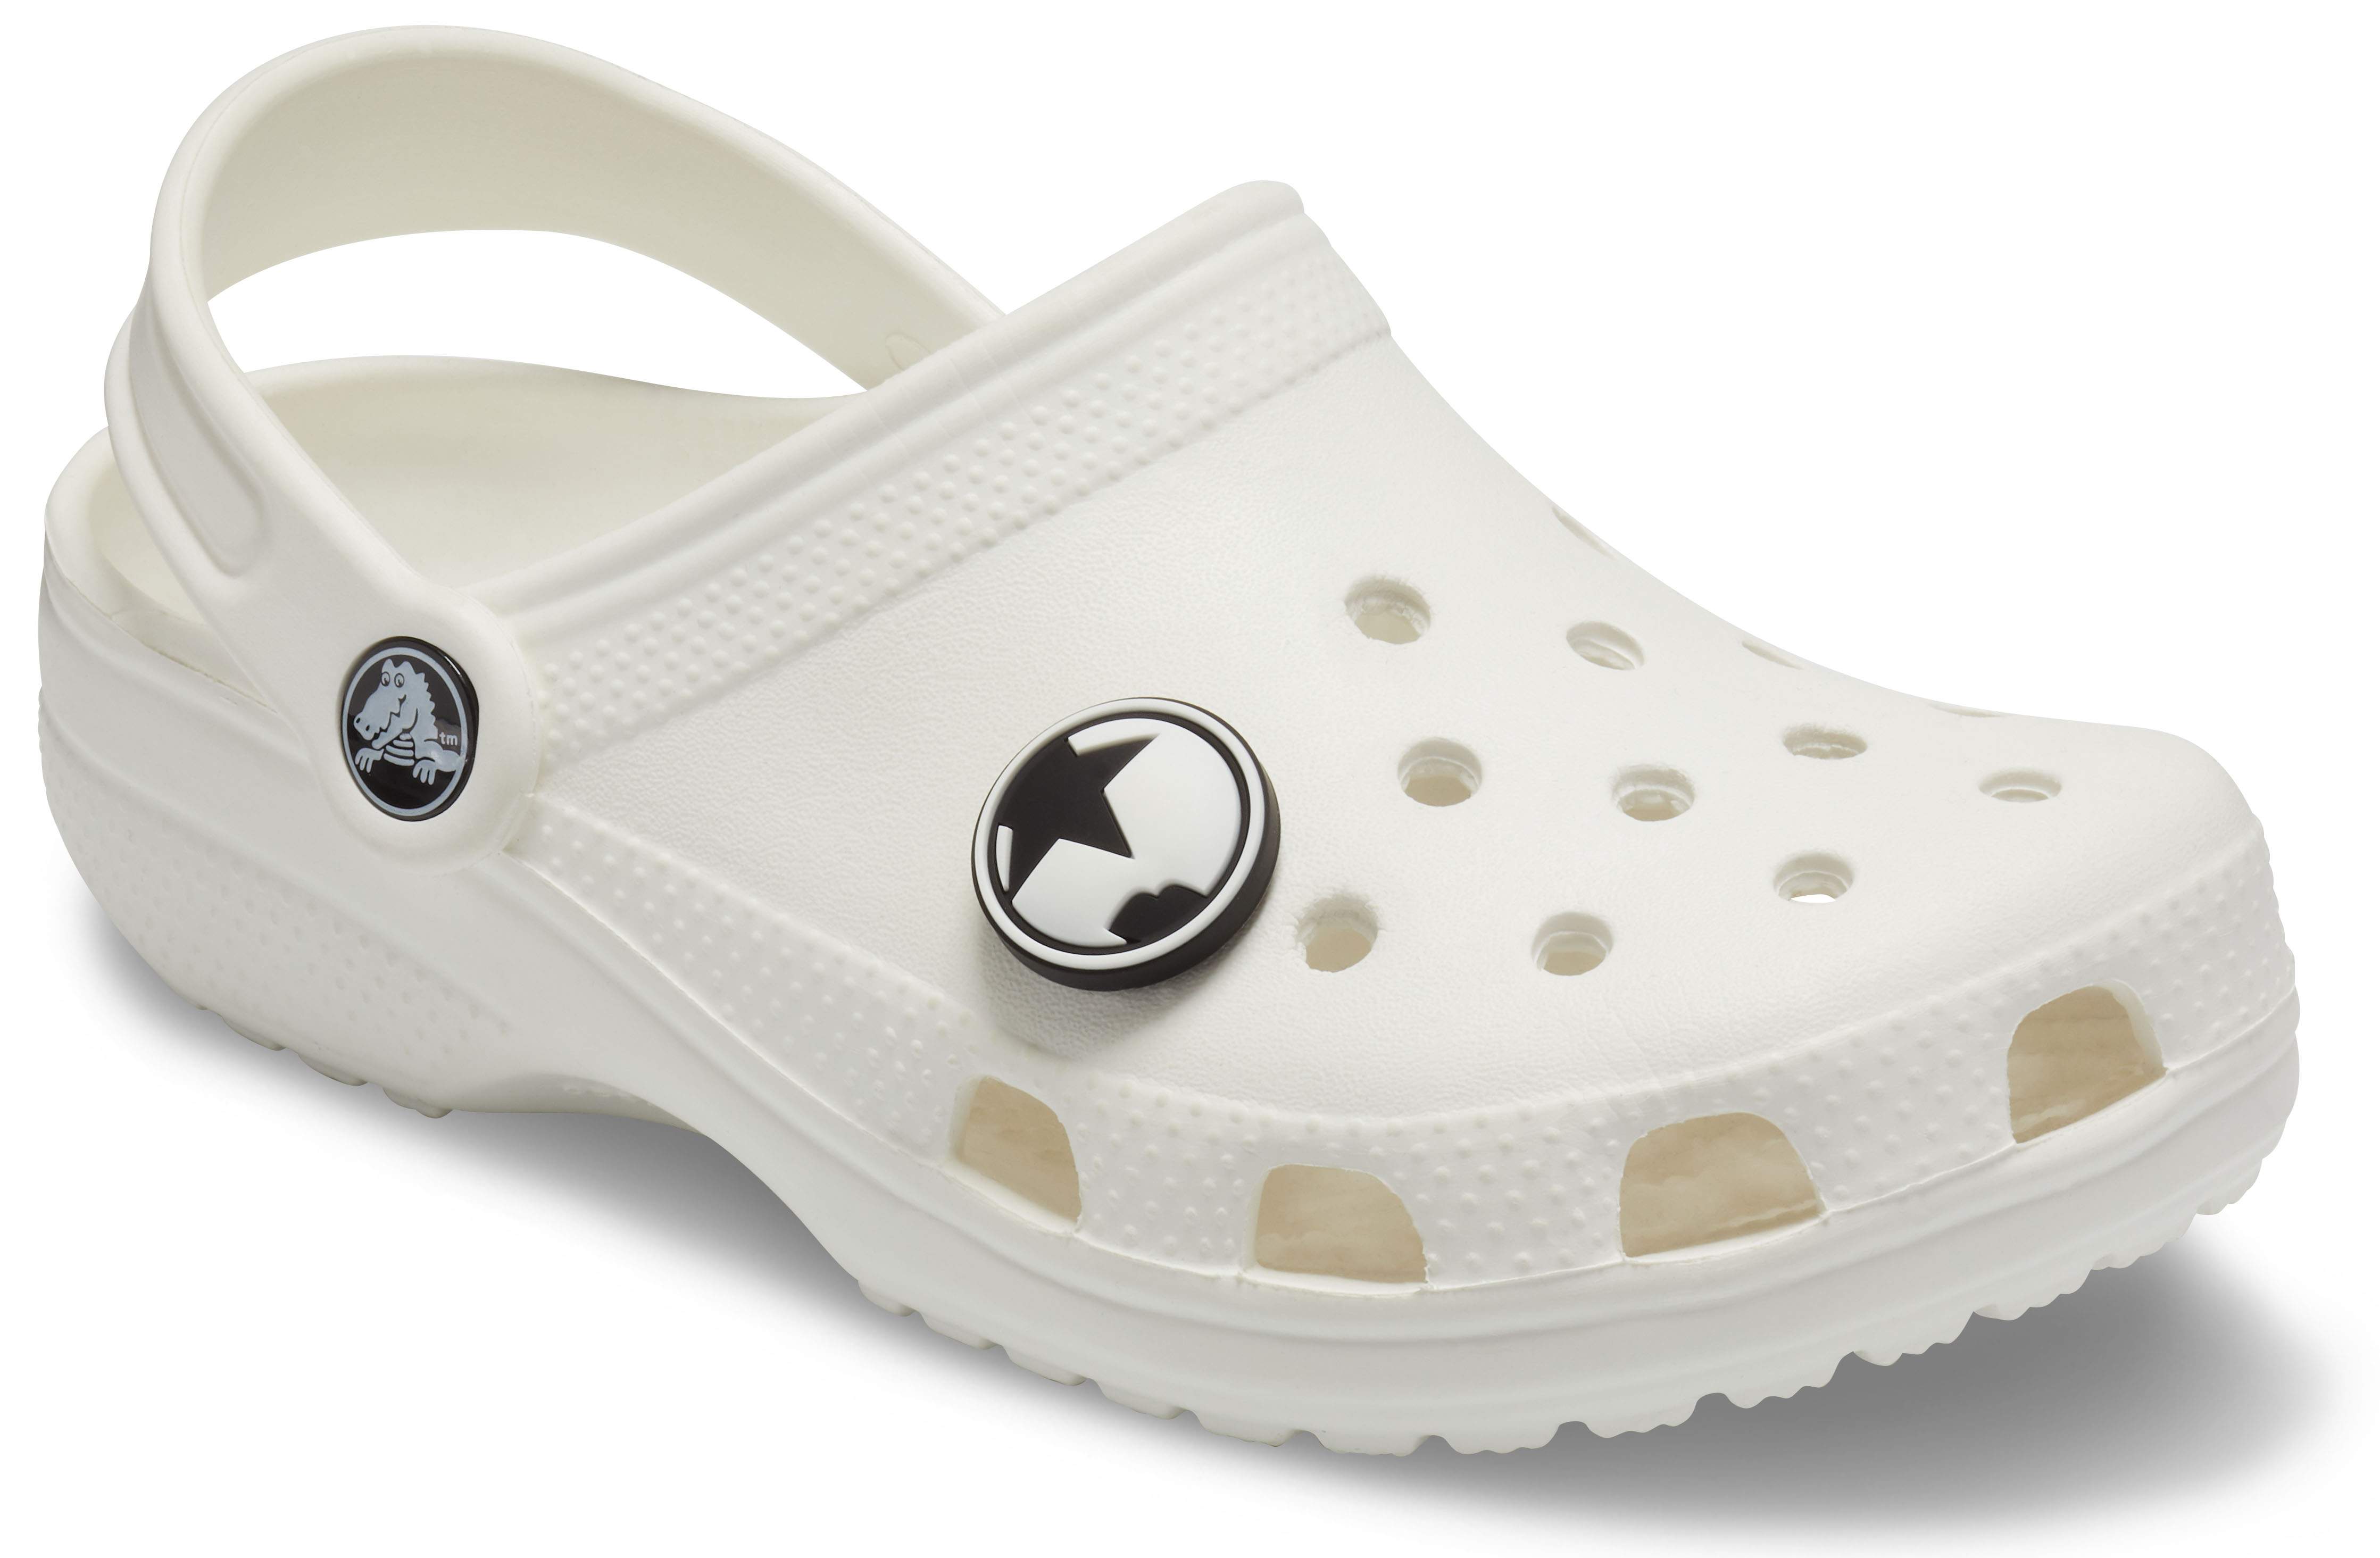 The Starchild Jibbitz Shoe Charm - Crocs